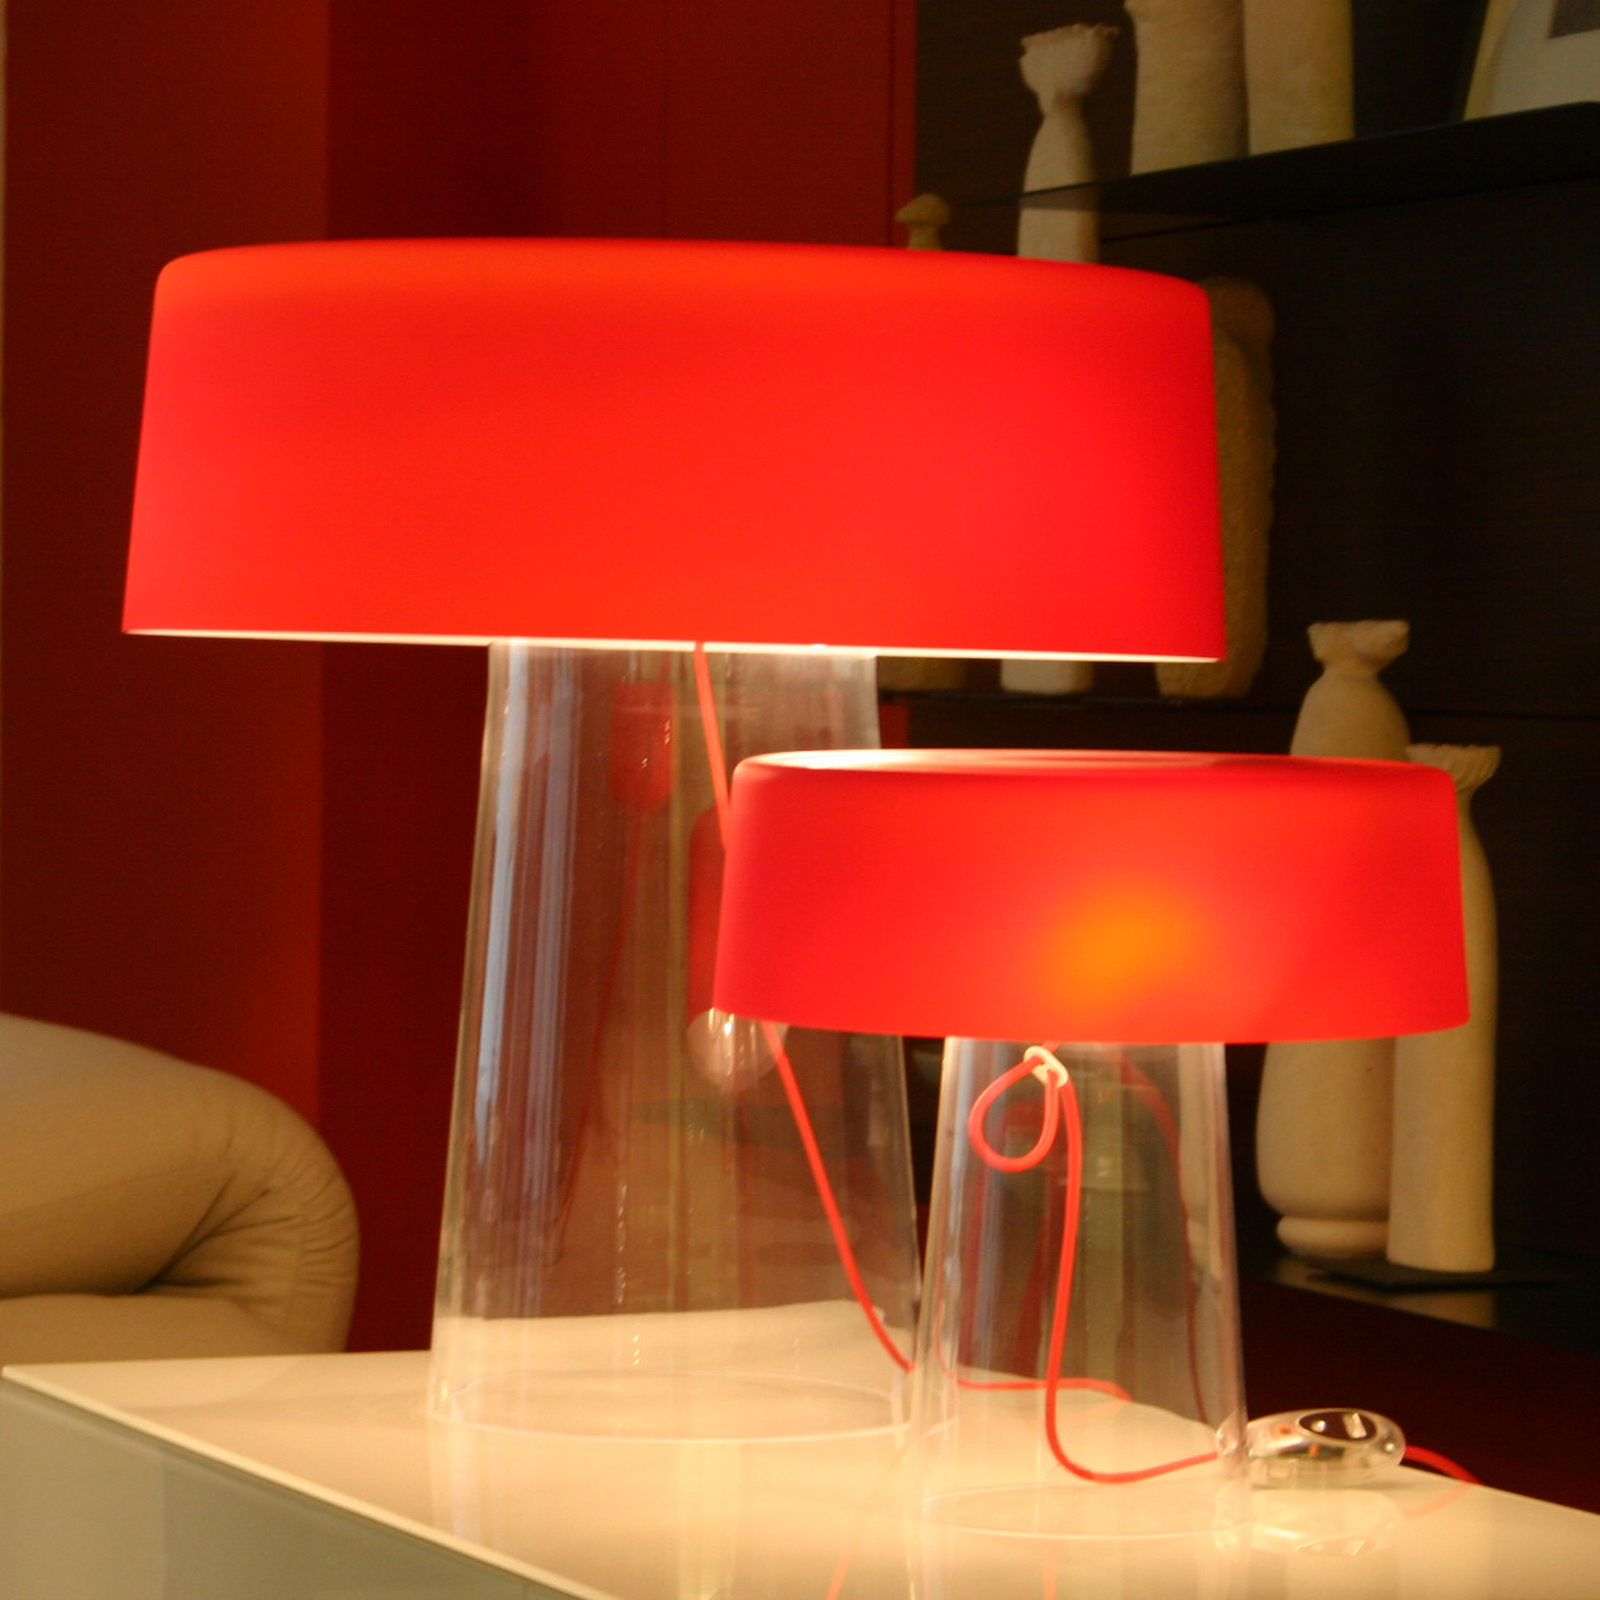 Prandina Glam tafellamp 36 cm kap helder/rood